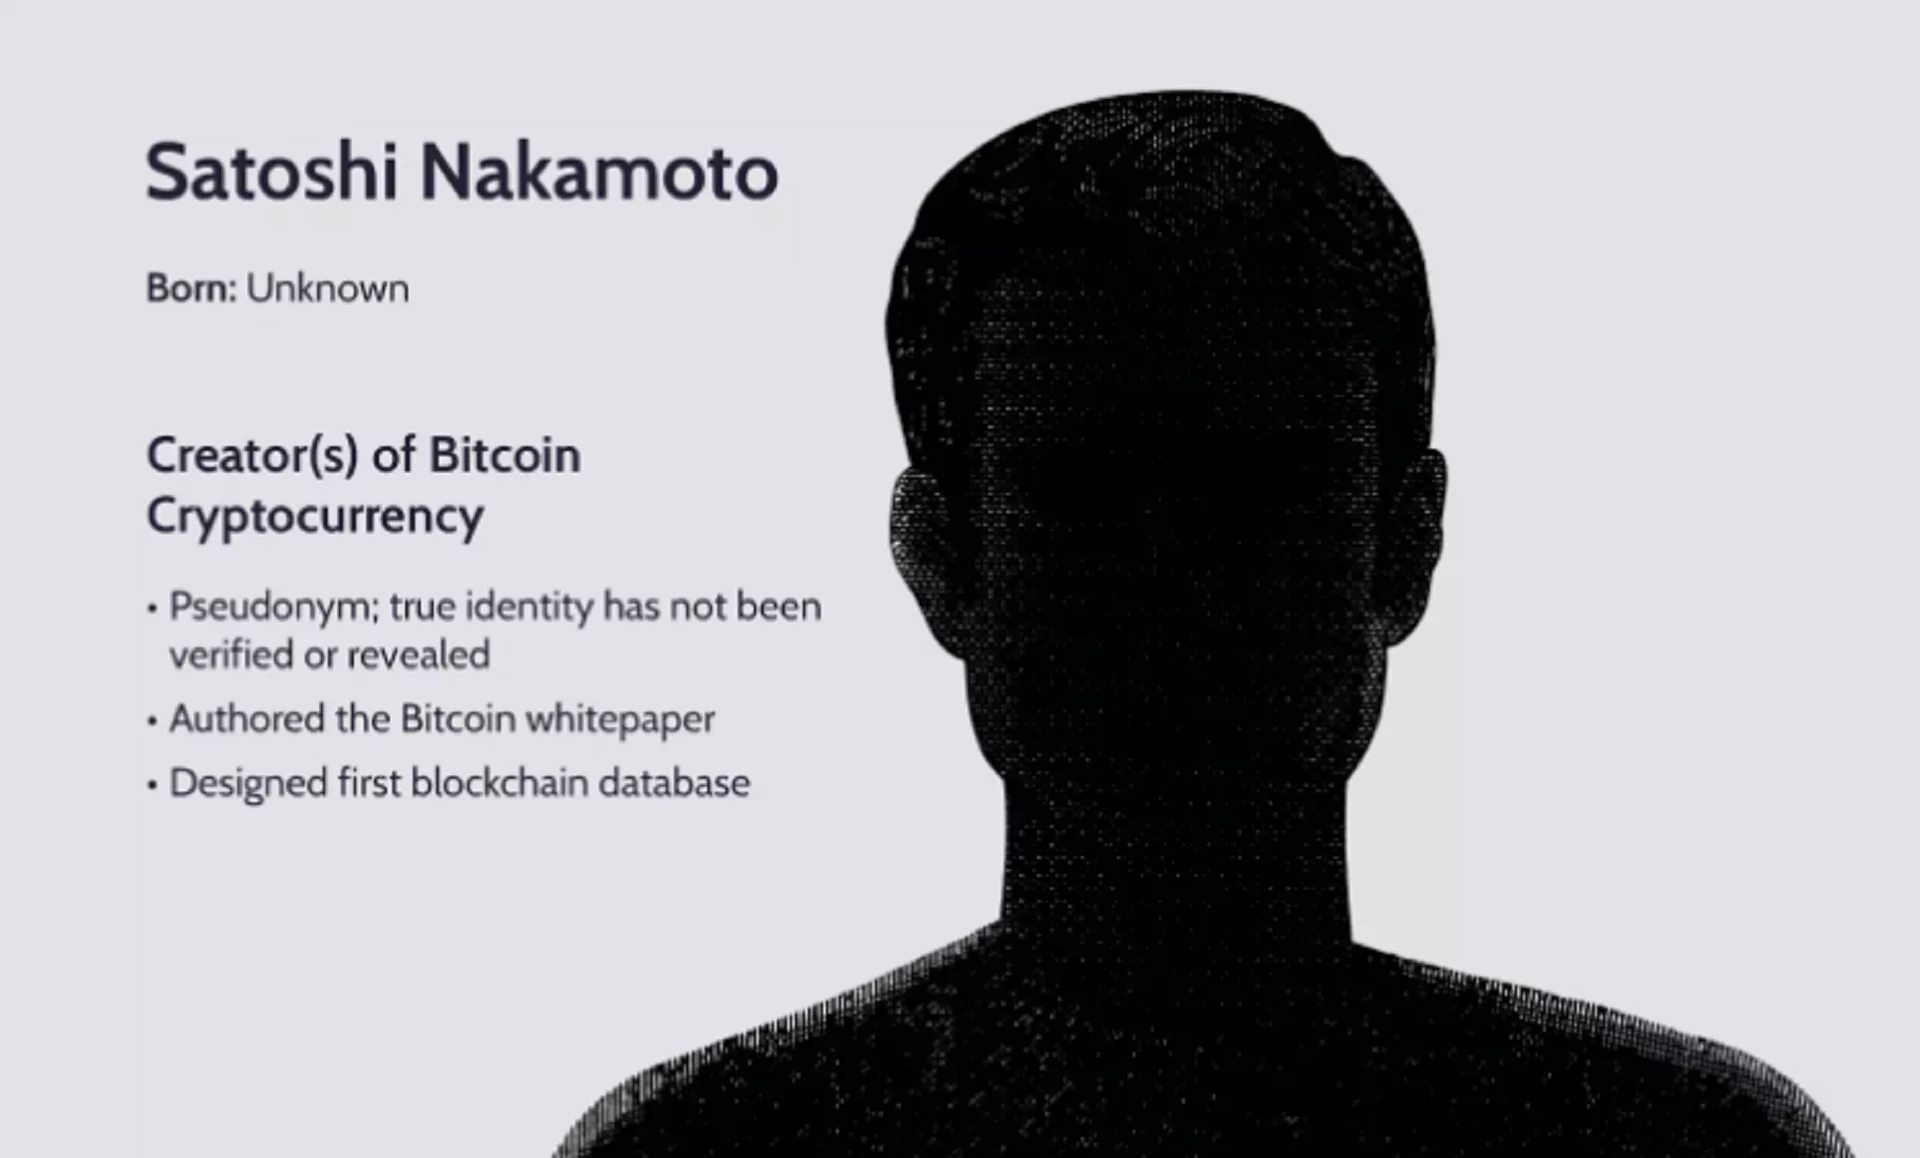 Screenshot of known information about Bitcoin creator Satoshi Nakamoto from investopedia